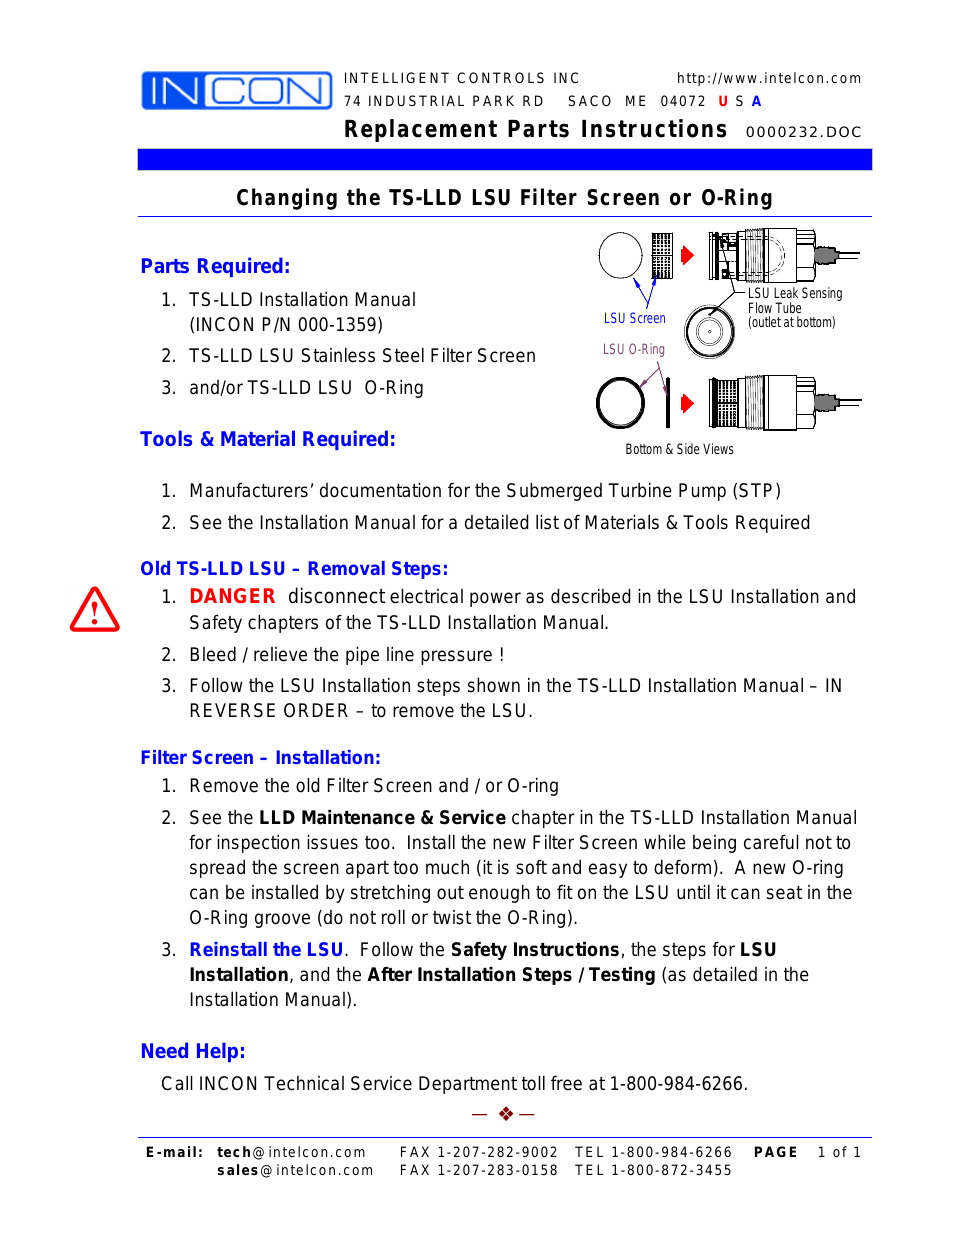 TS-LLD Changing the TS-LLD LSU Filter Screen or O-Ring